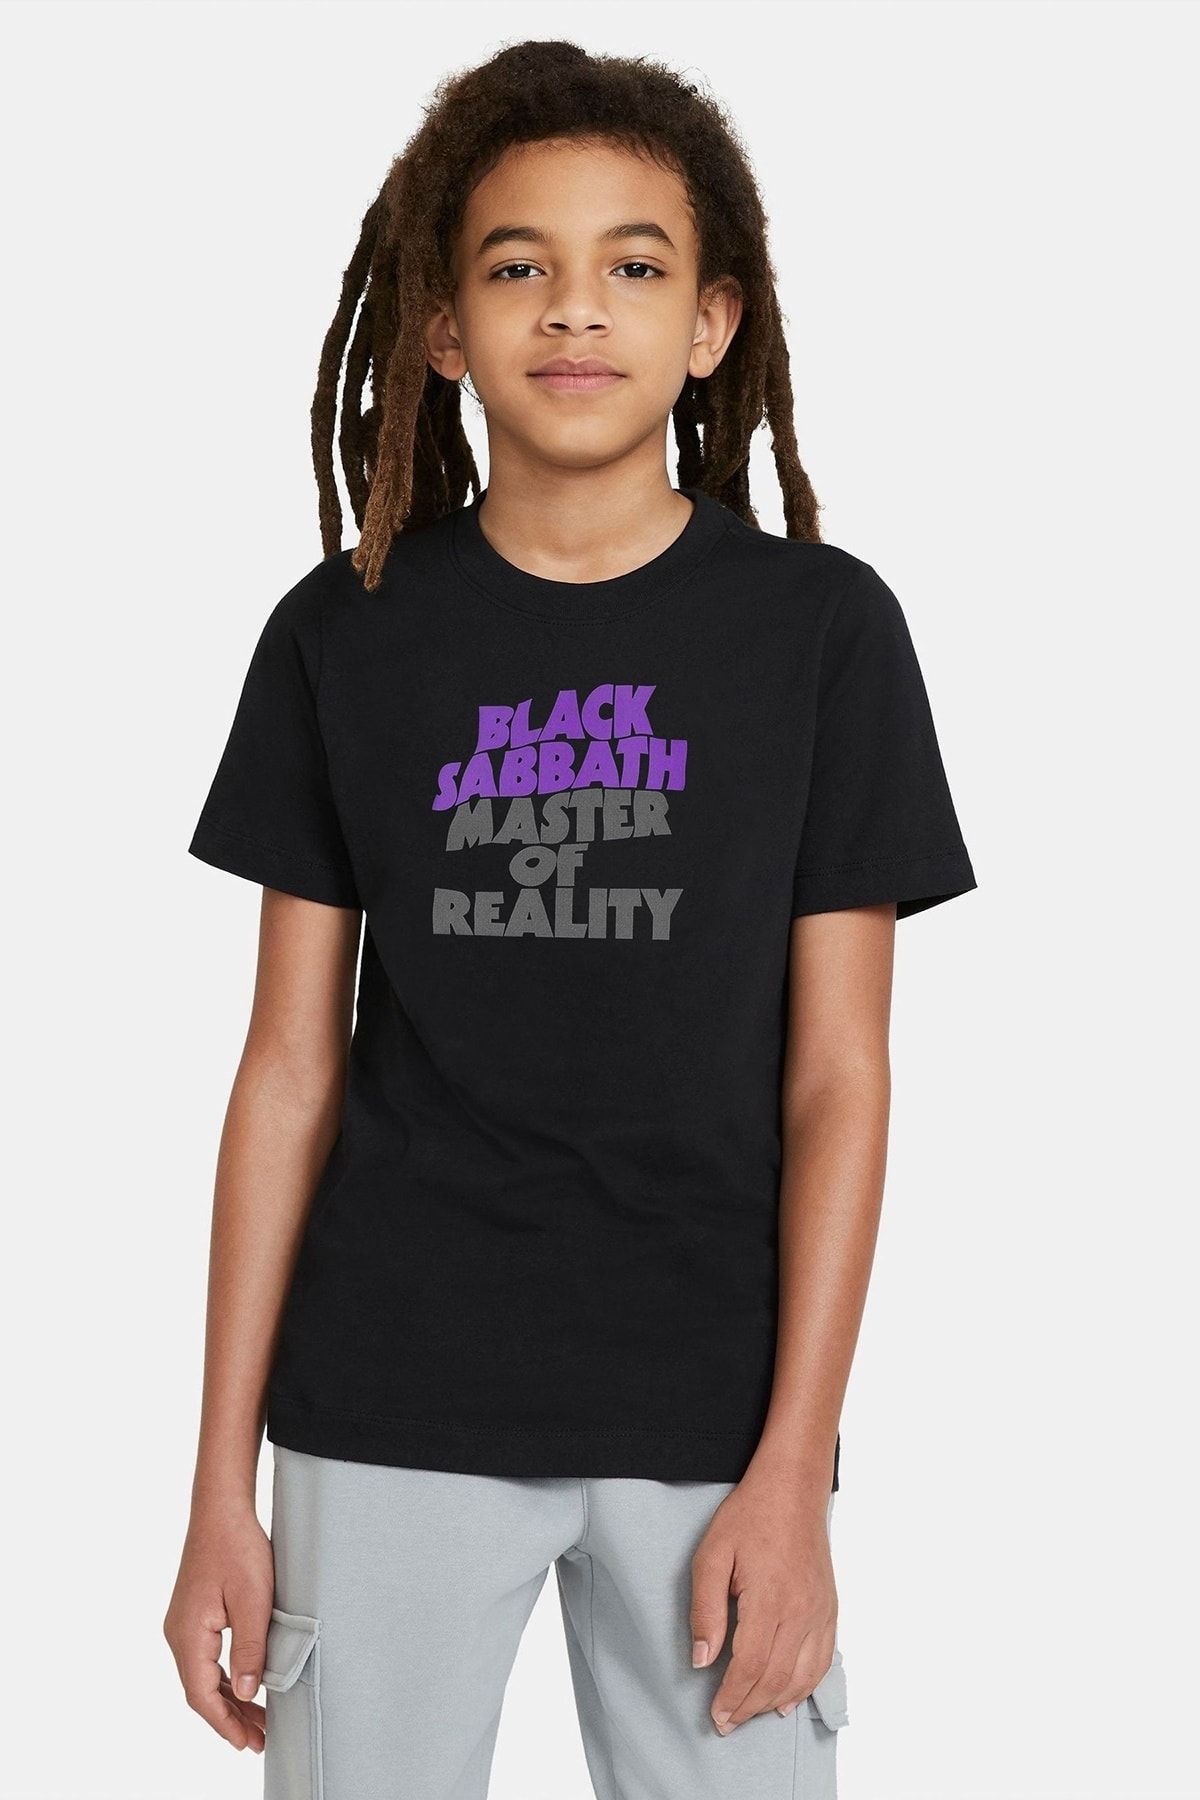 QIVI Unisex Çocuk Siyah Black Sabbath Master Of Reality Baskılı T-shirt